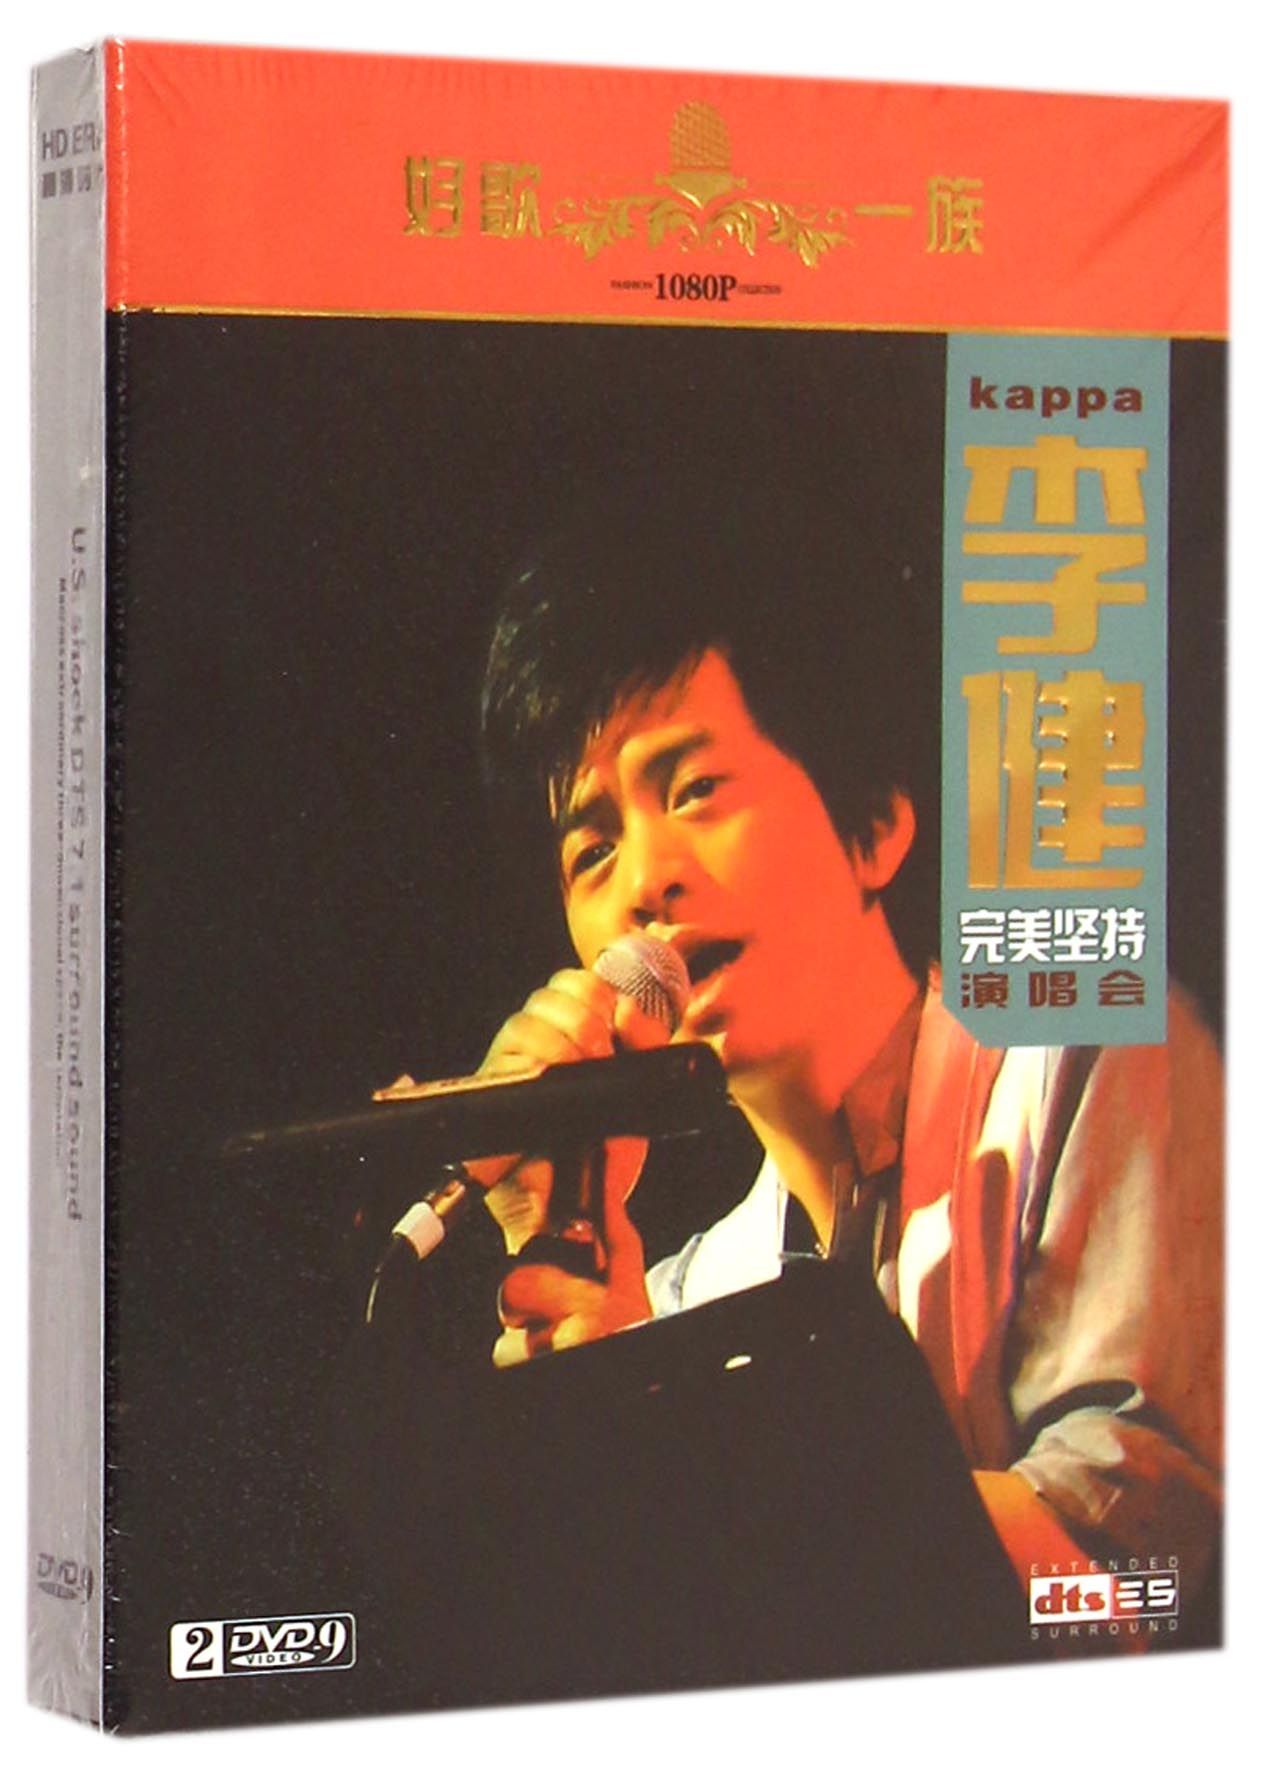 DVD-9李健完美坚持演唱会(2碟装)